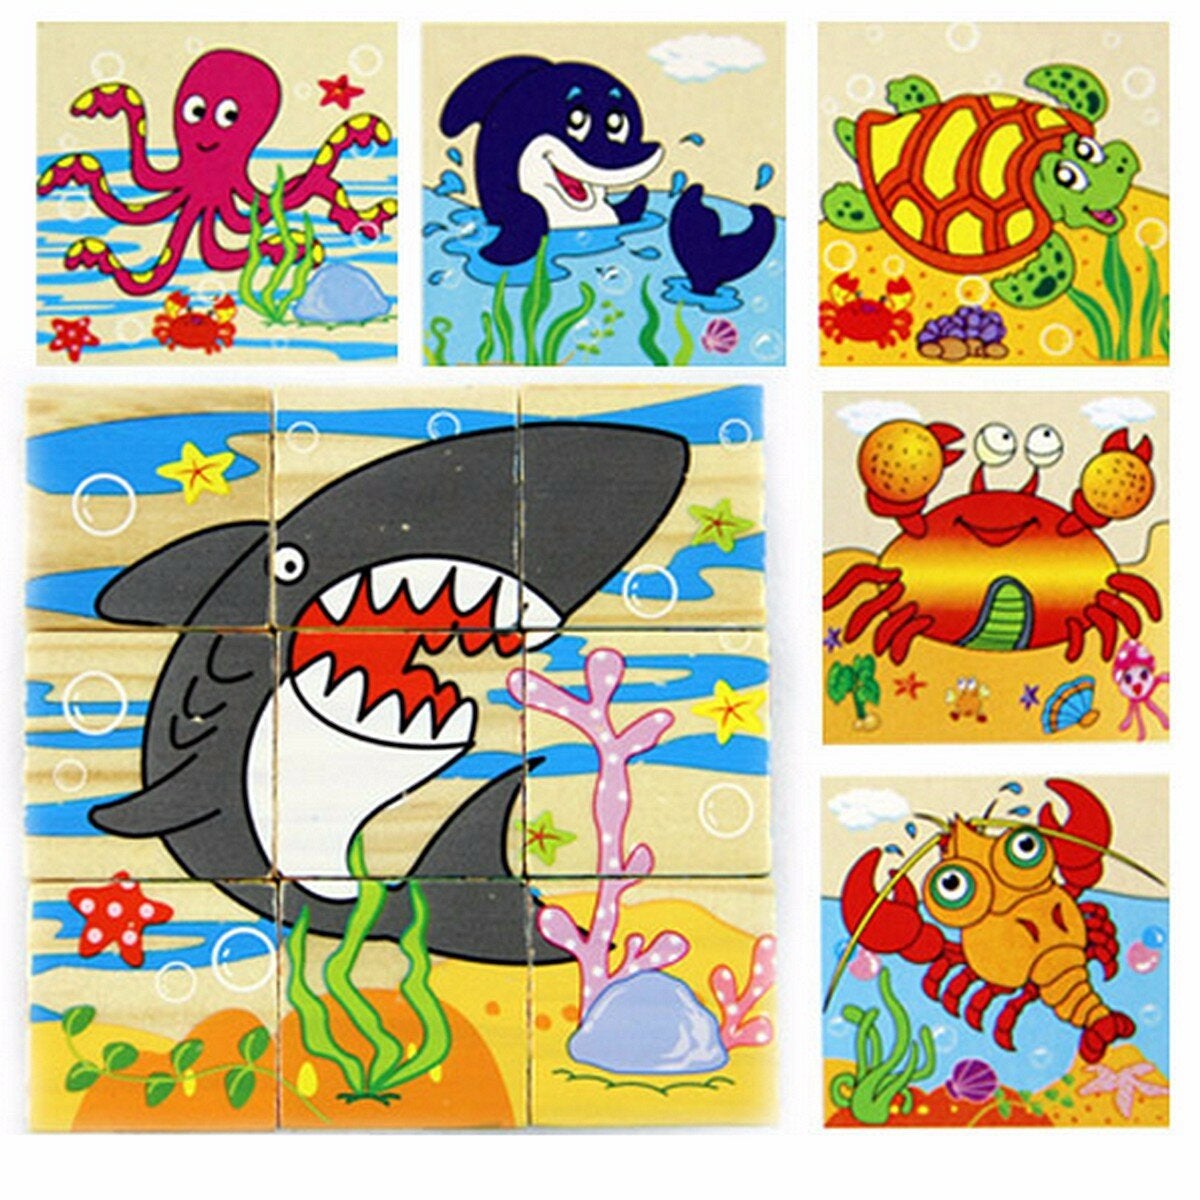 Children Cartoon Puzzle Blocks Colorful Educational Wooden Kids Toys